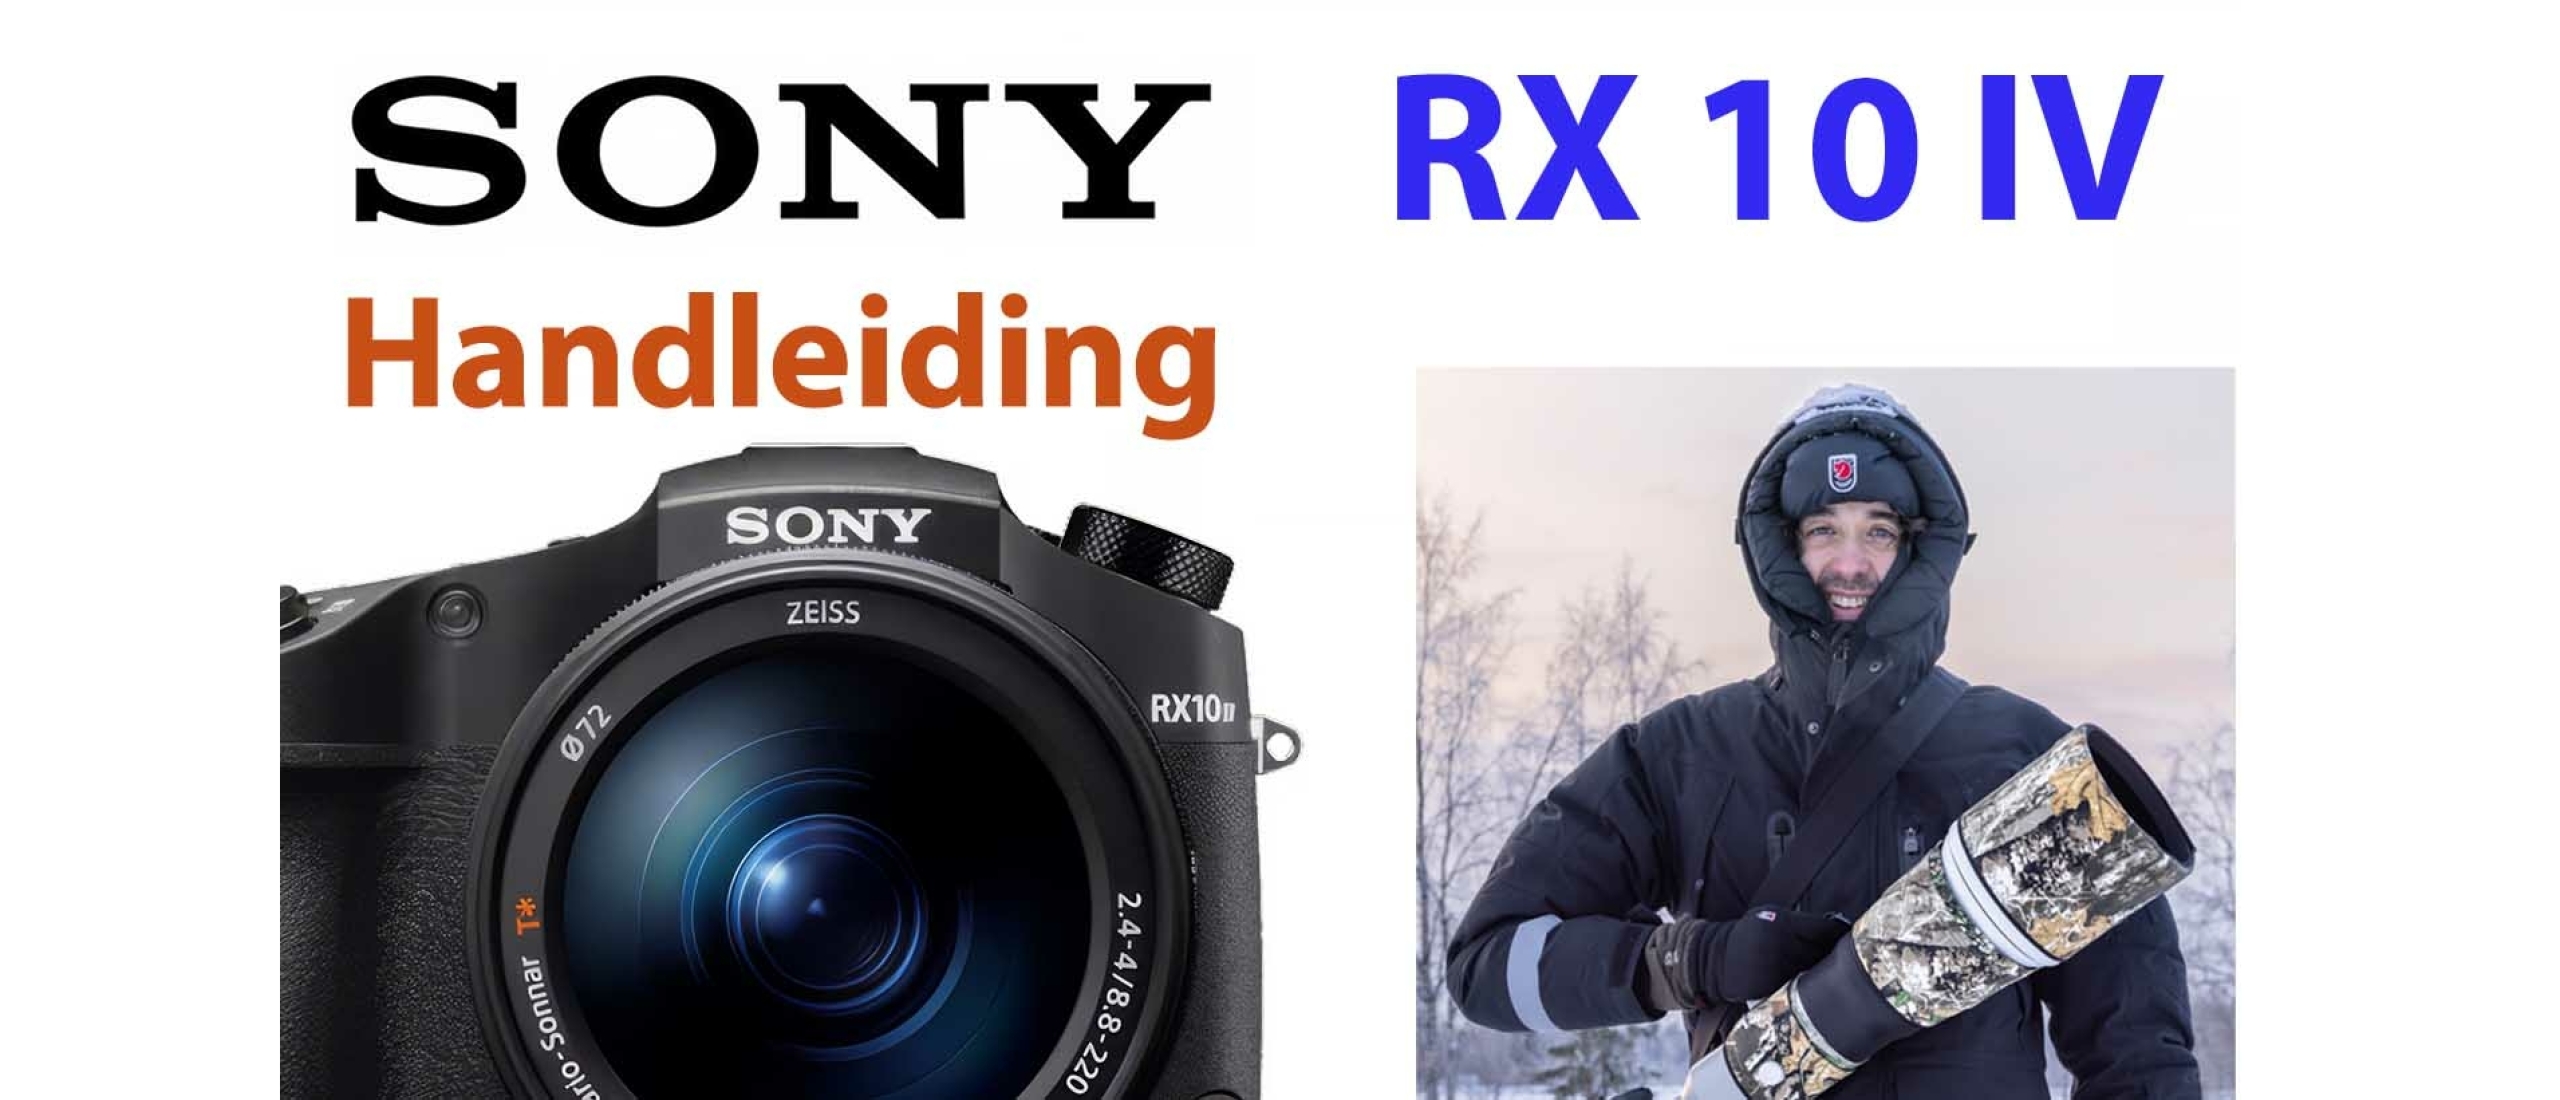 Sony DSC-RX10 Mark IV Handleiding Video: Menu, Functies, Knoppen & Instellingen uitgelegd